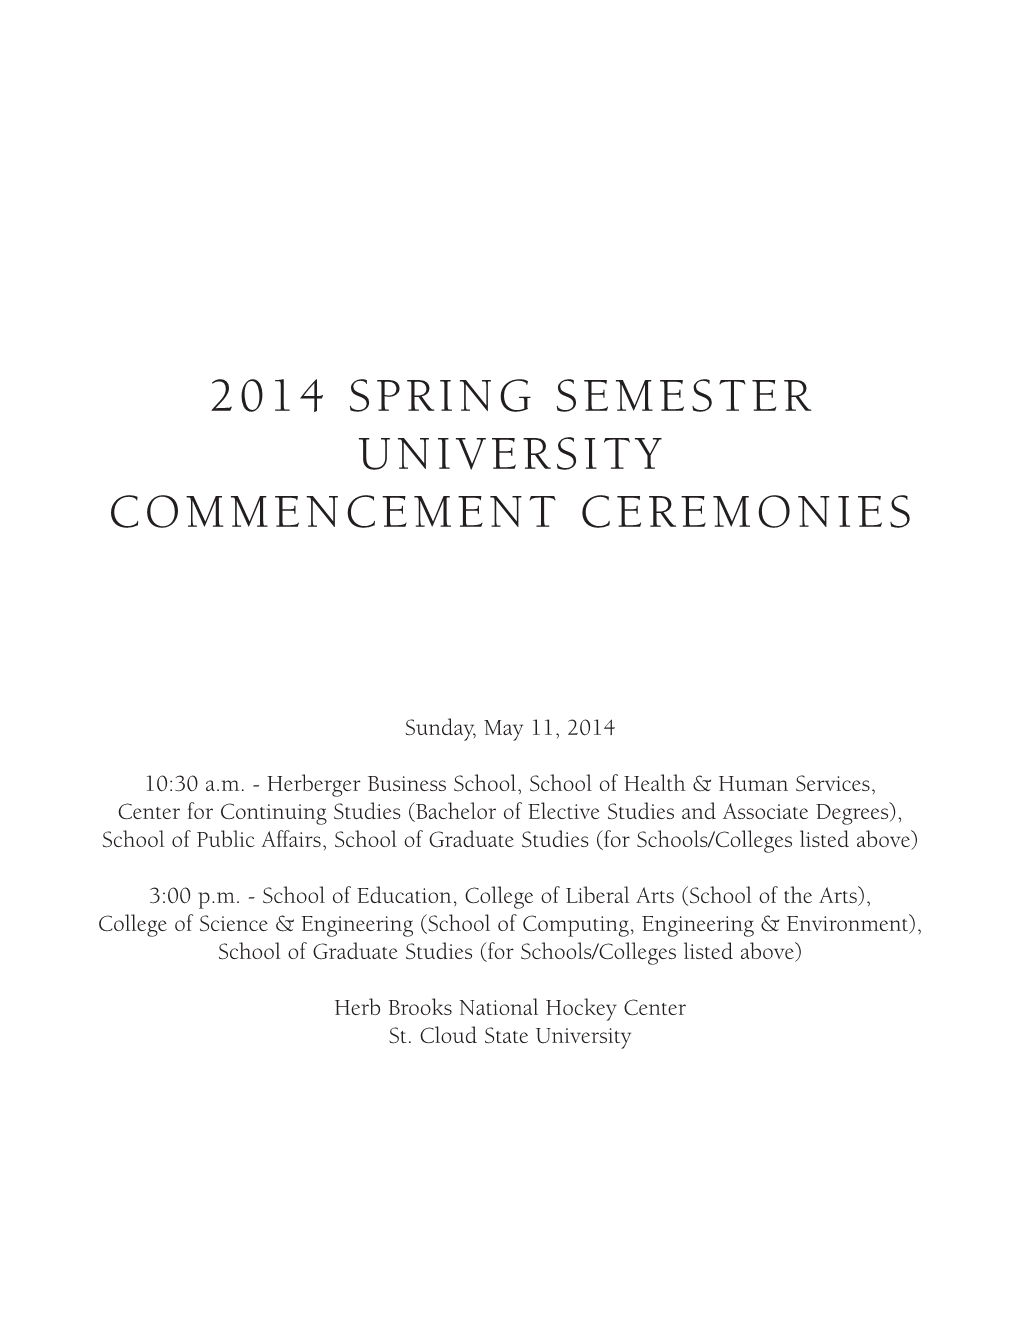 2014 Spring Semester University Commencement Ceremonies